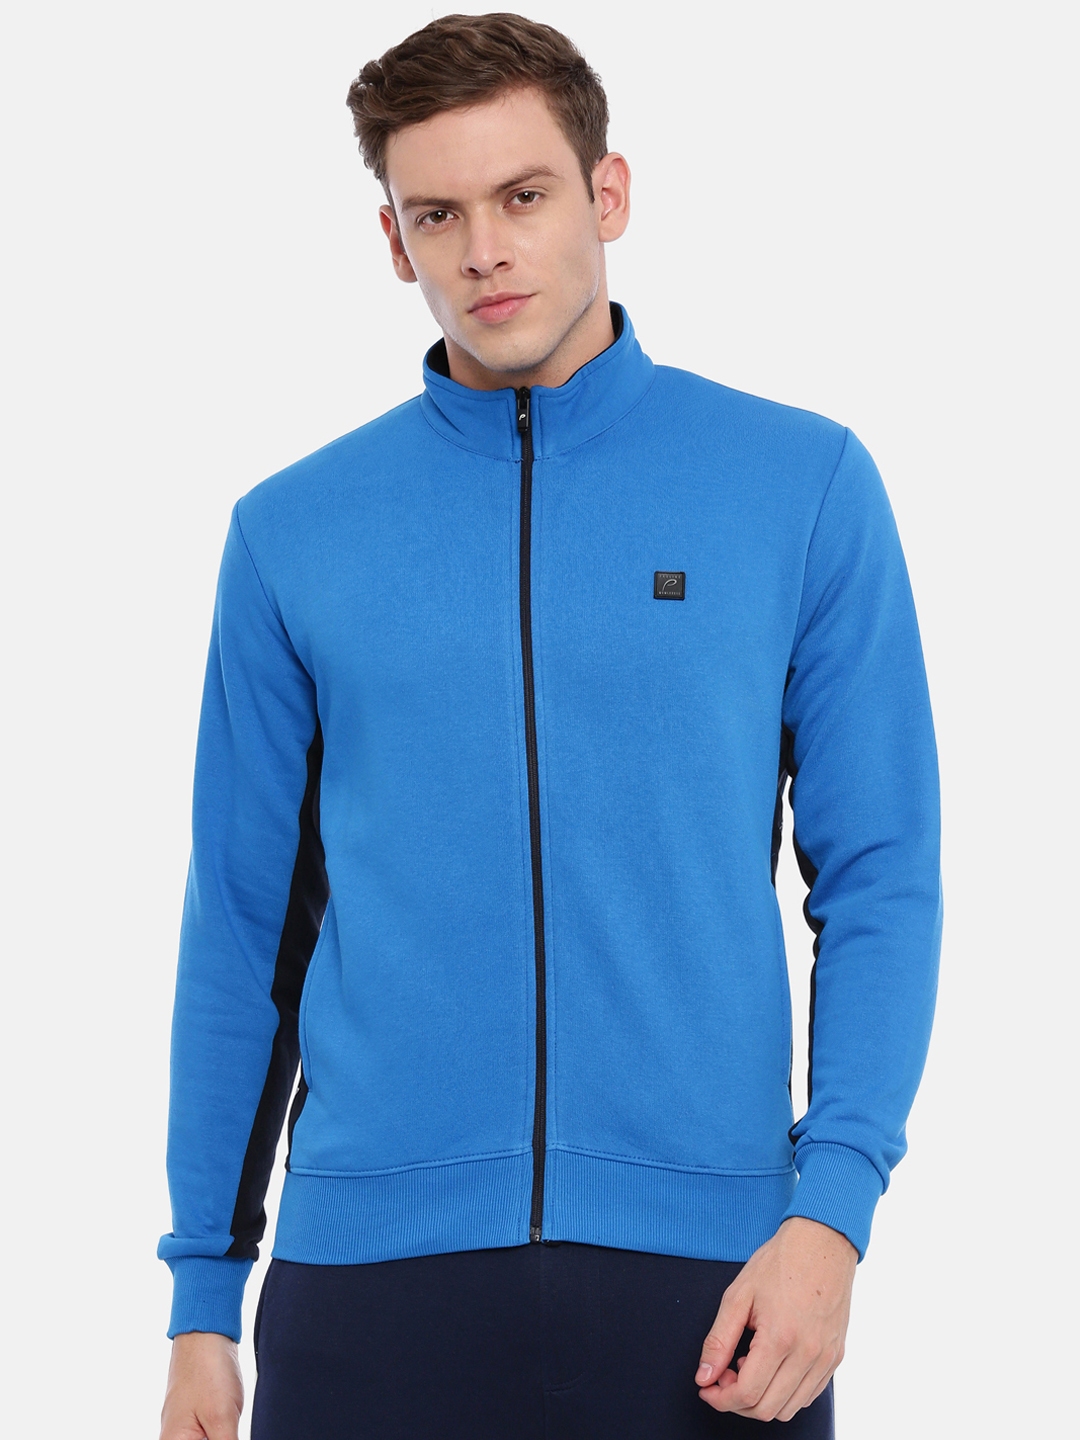 Buy Proline Active Men Blue & Black Colourblocked Sweatshirt ...